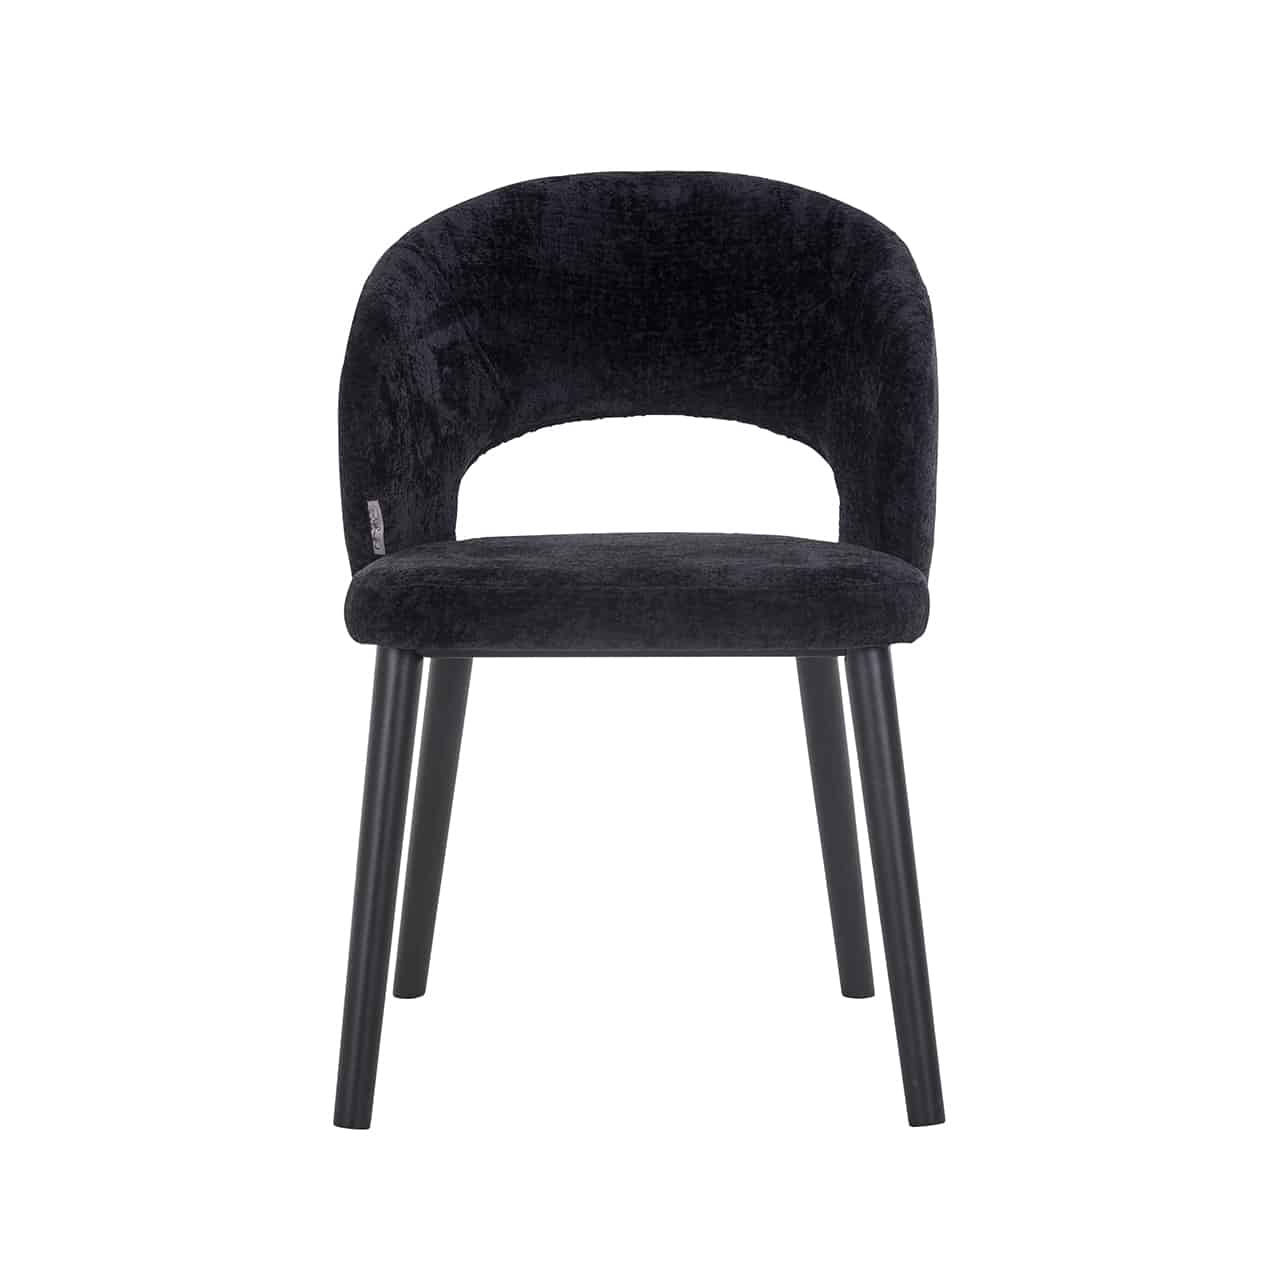 Chair Savoy black chenilles4560-black-chenillerichmond